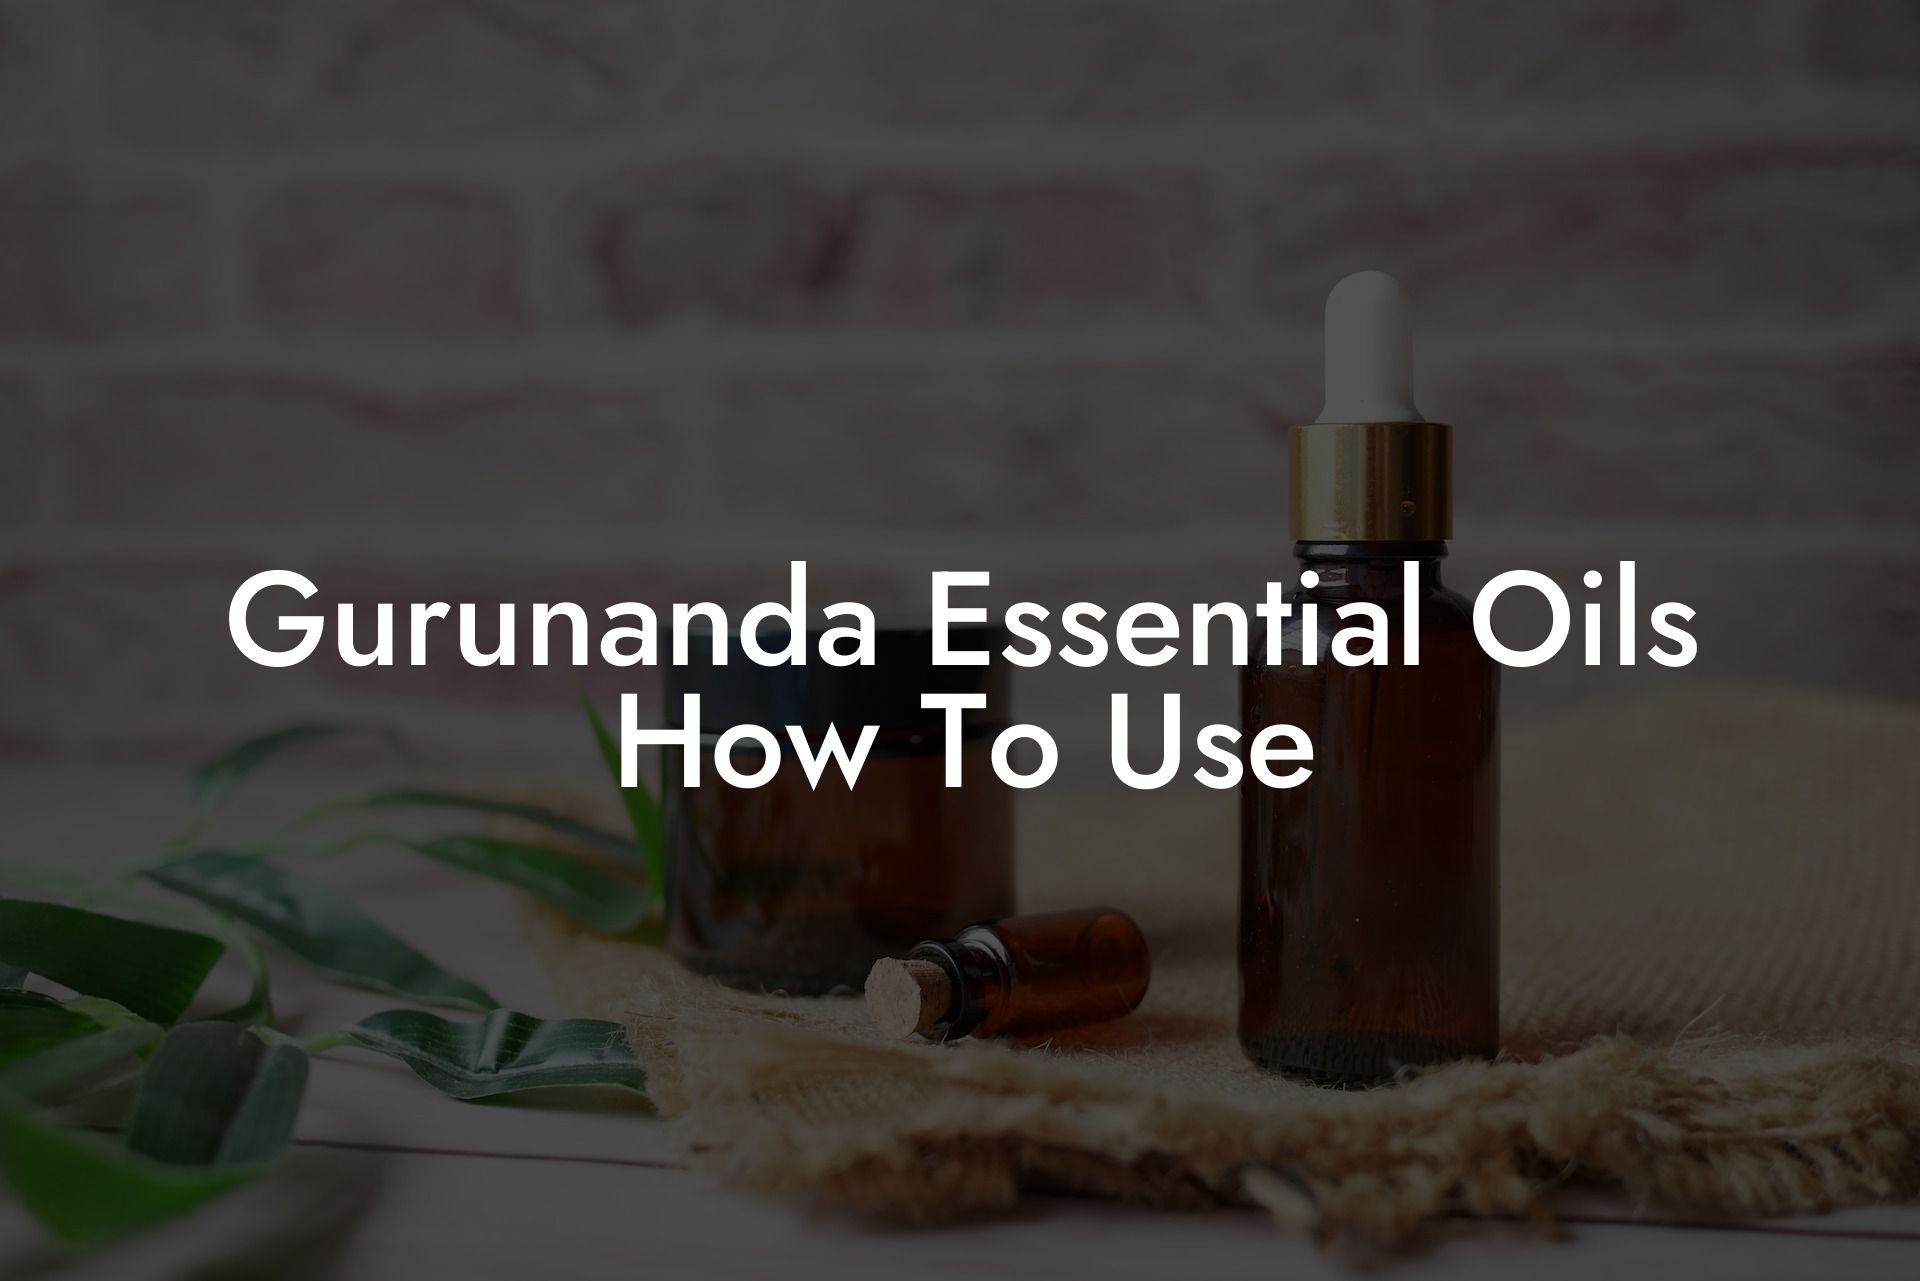 Gurunanda Essential Oils How To Use